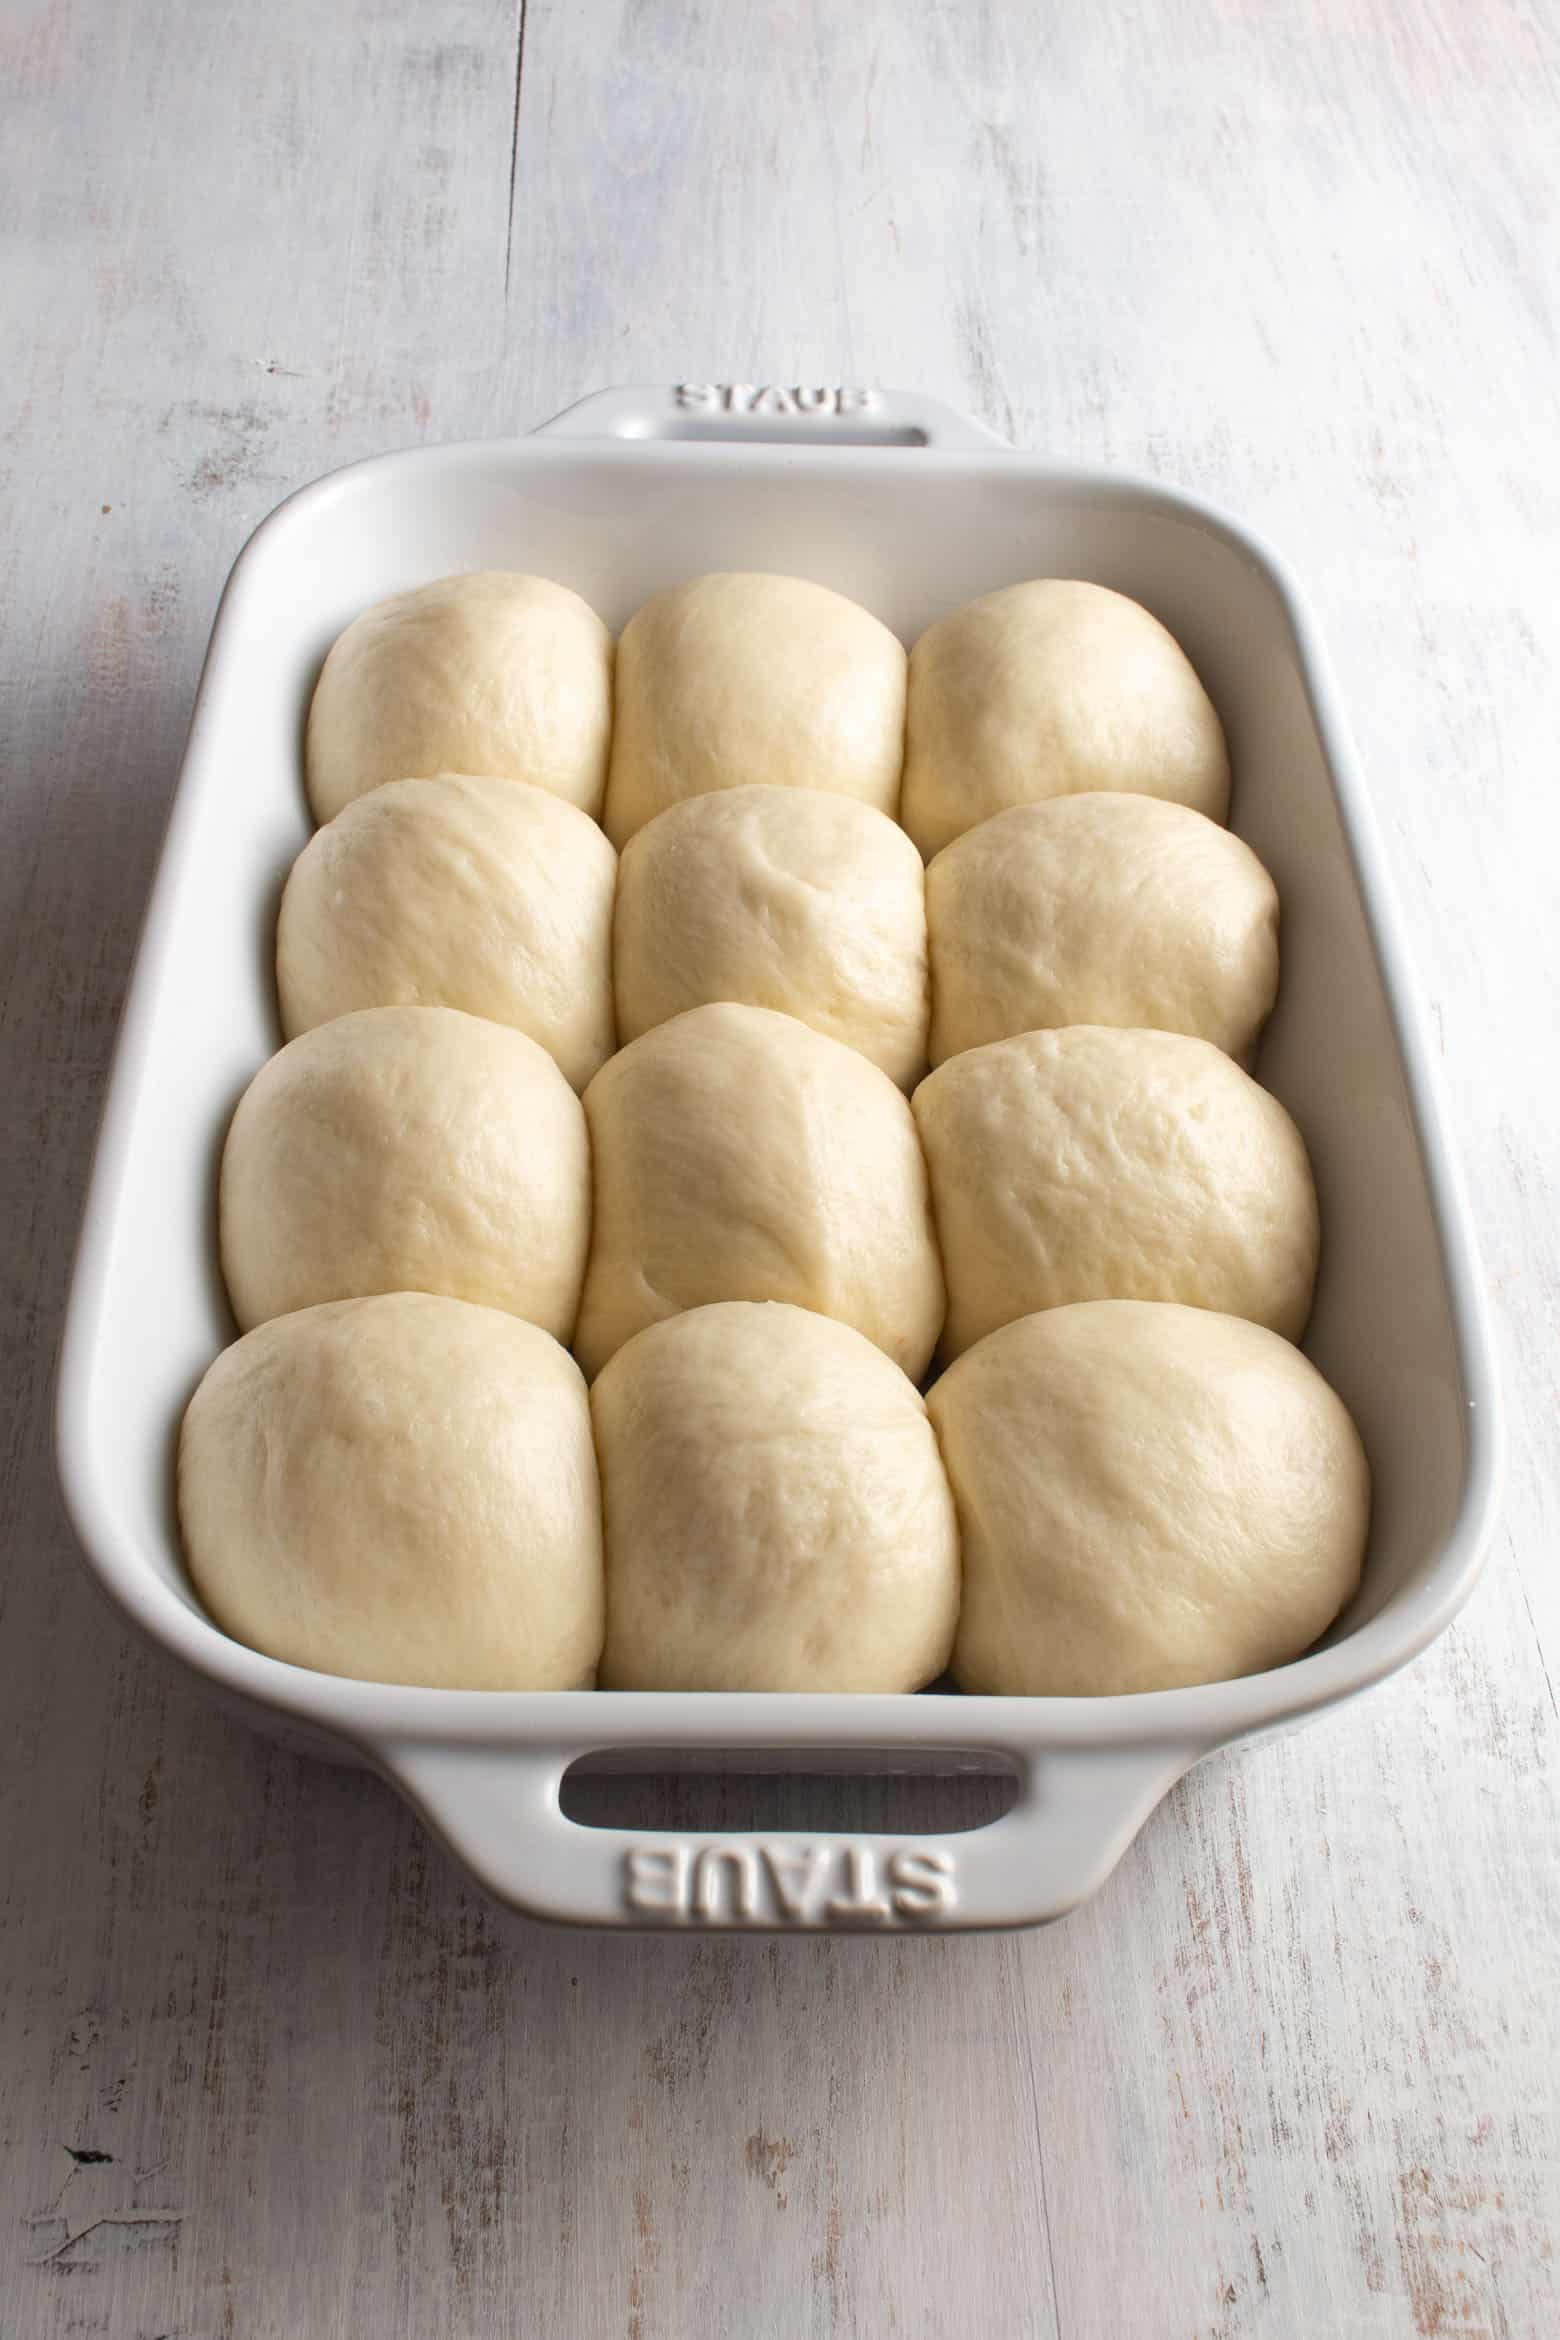 Balls of risen dough in a baking pan